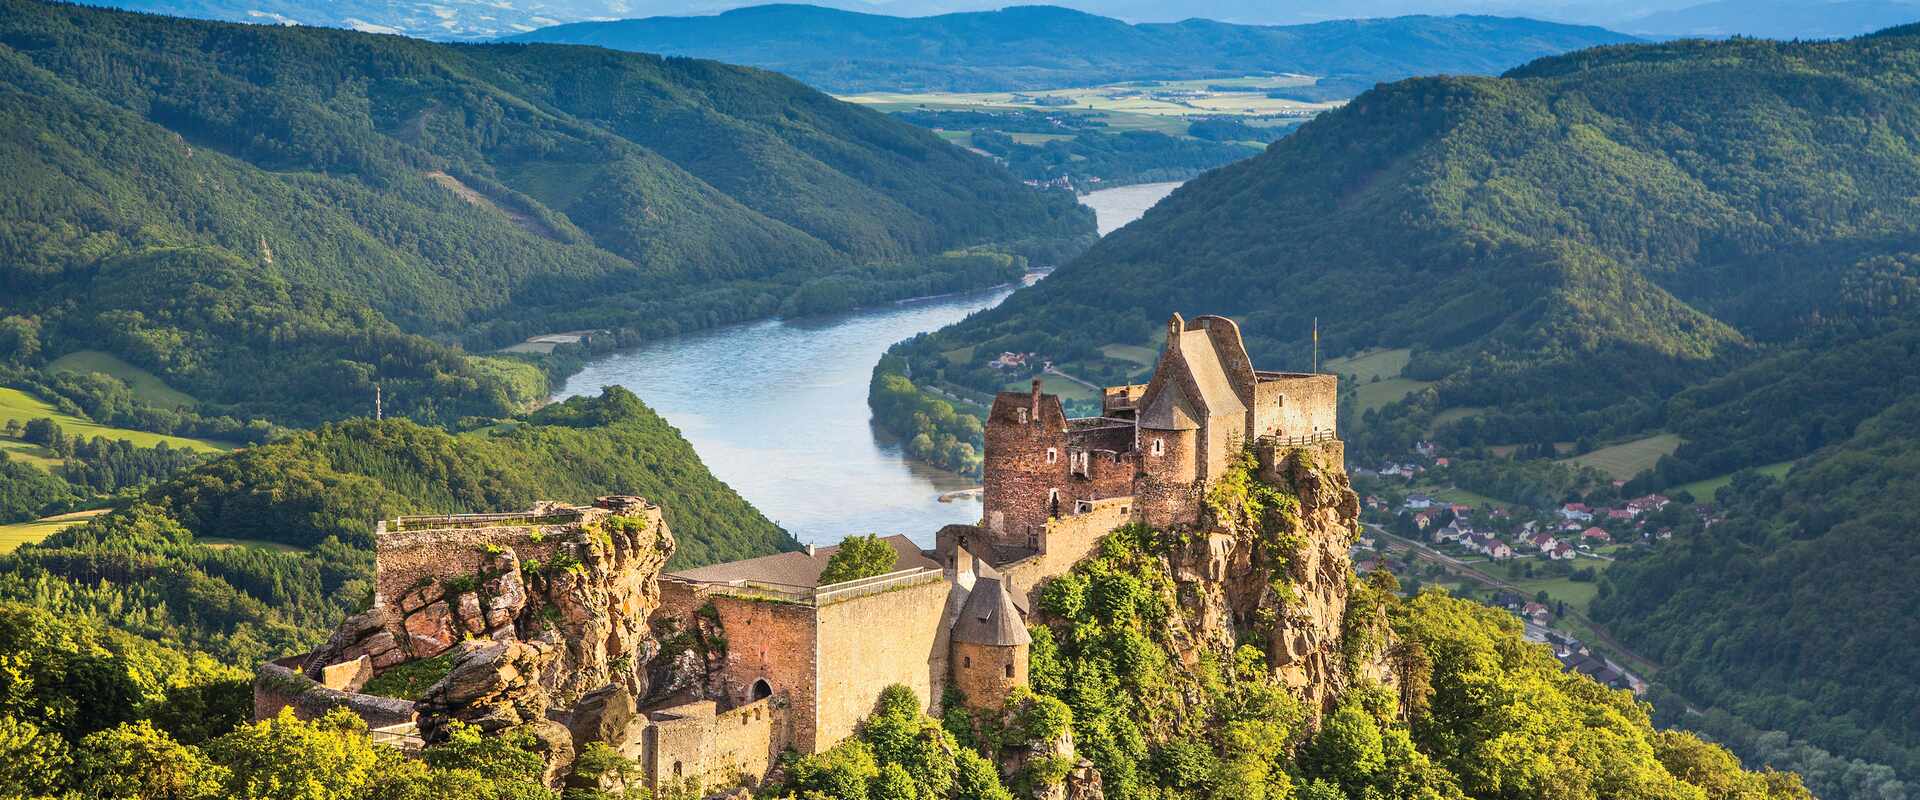 View of Aggstein Castle in Wachau Valley along the Danube River, Austria